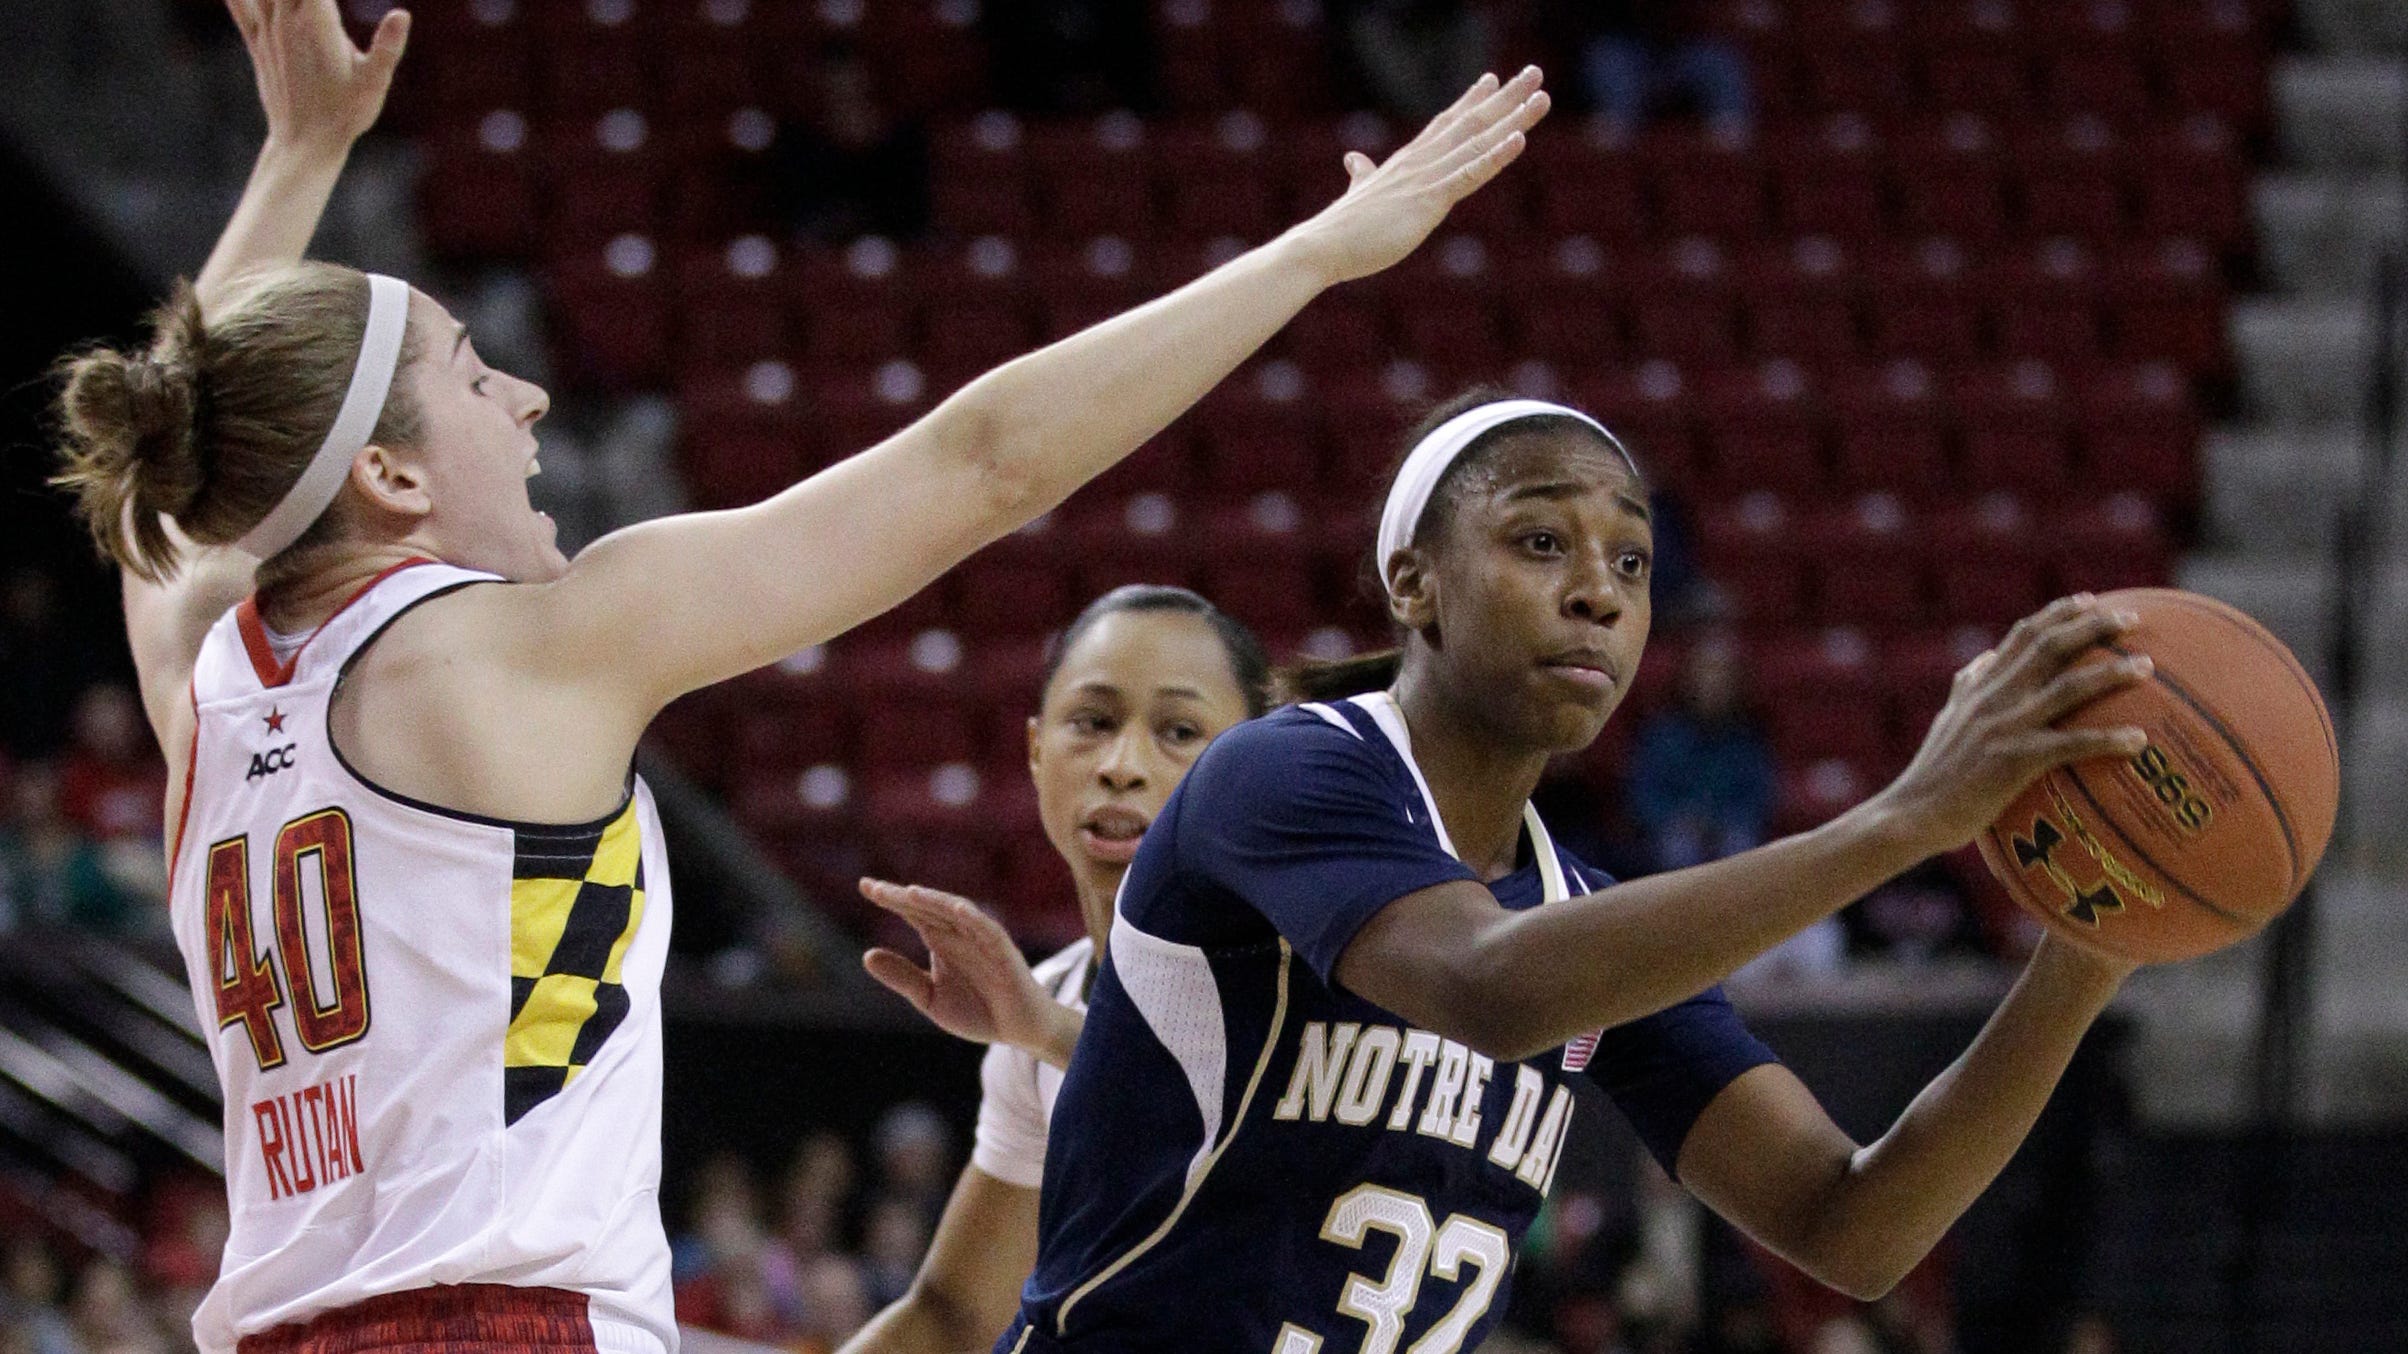 Notre Dame's Loyd impresses WNBA scouts